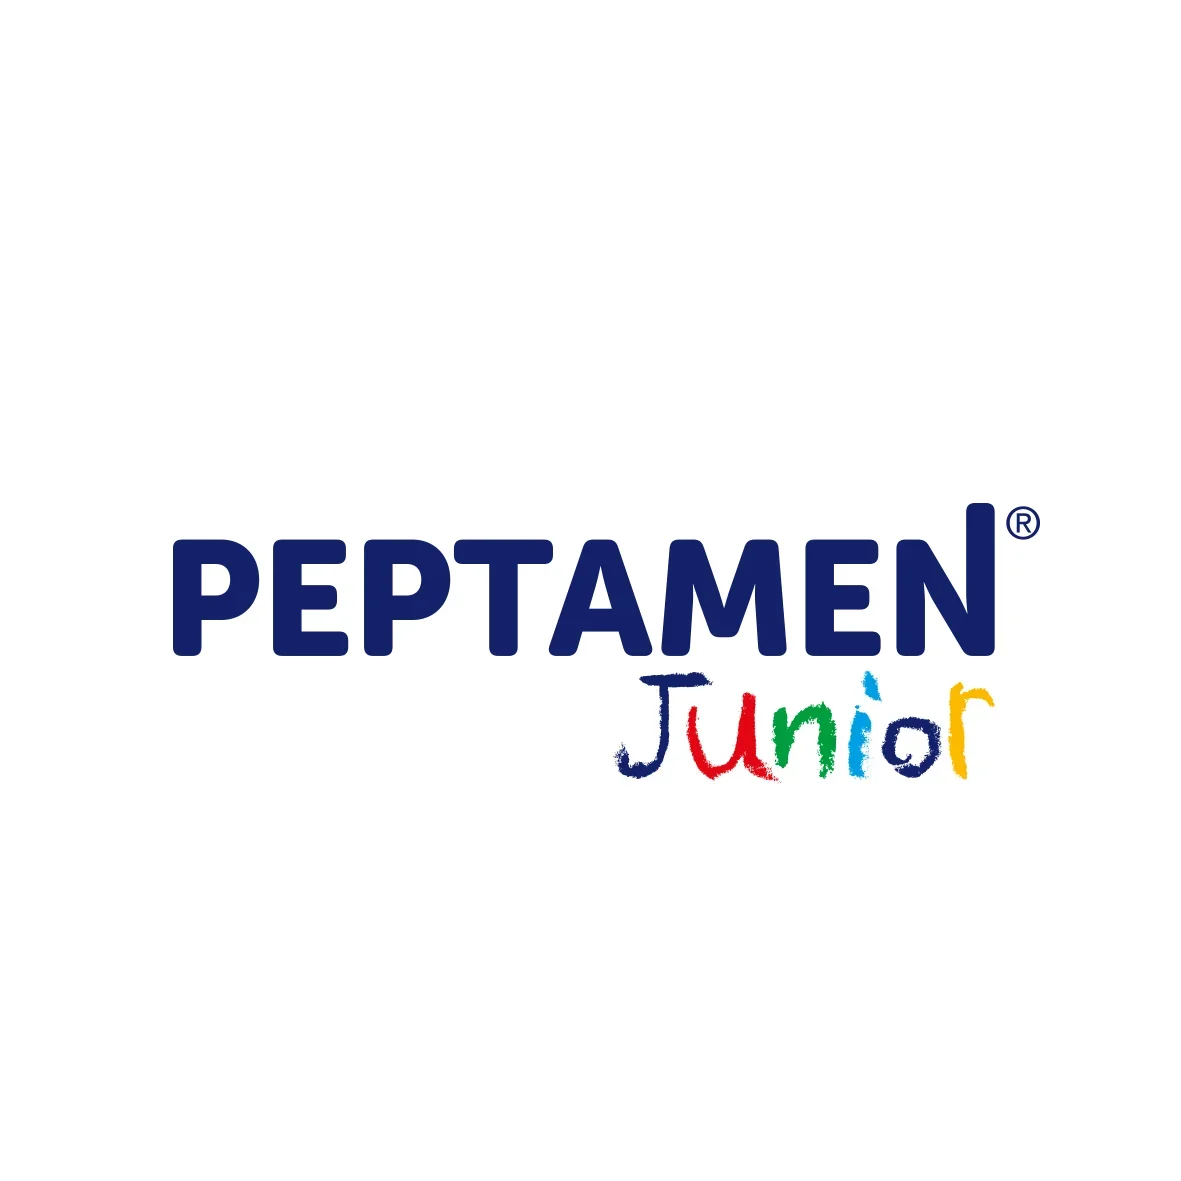 Peptamen® Junior logo